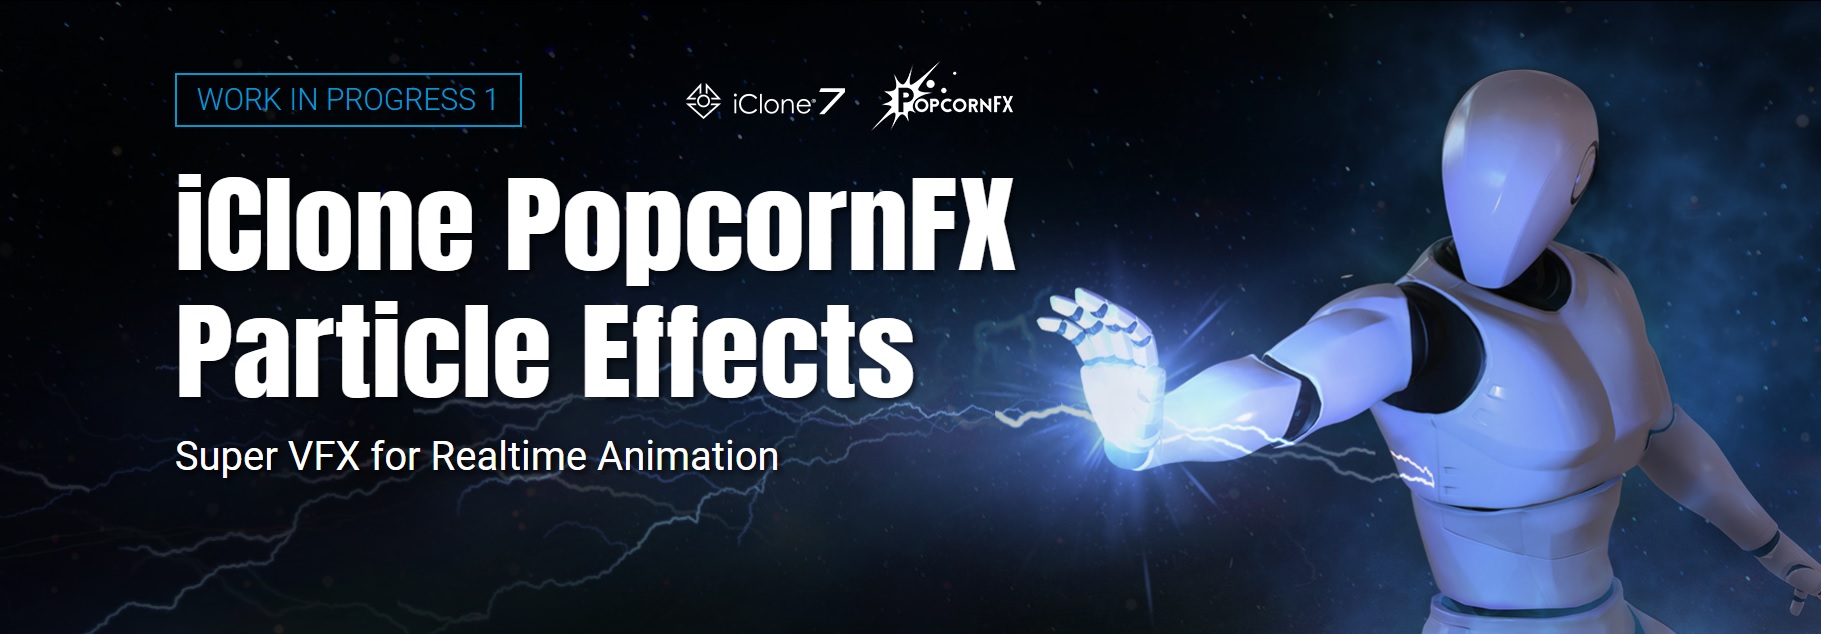 iclone popcornfx